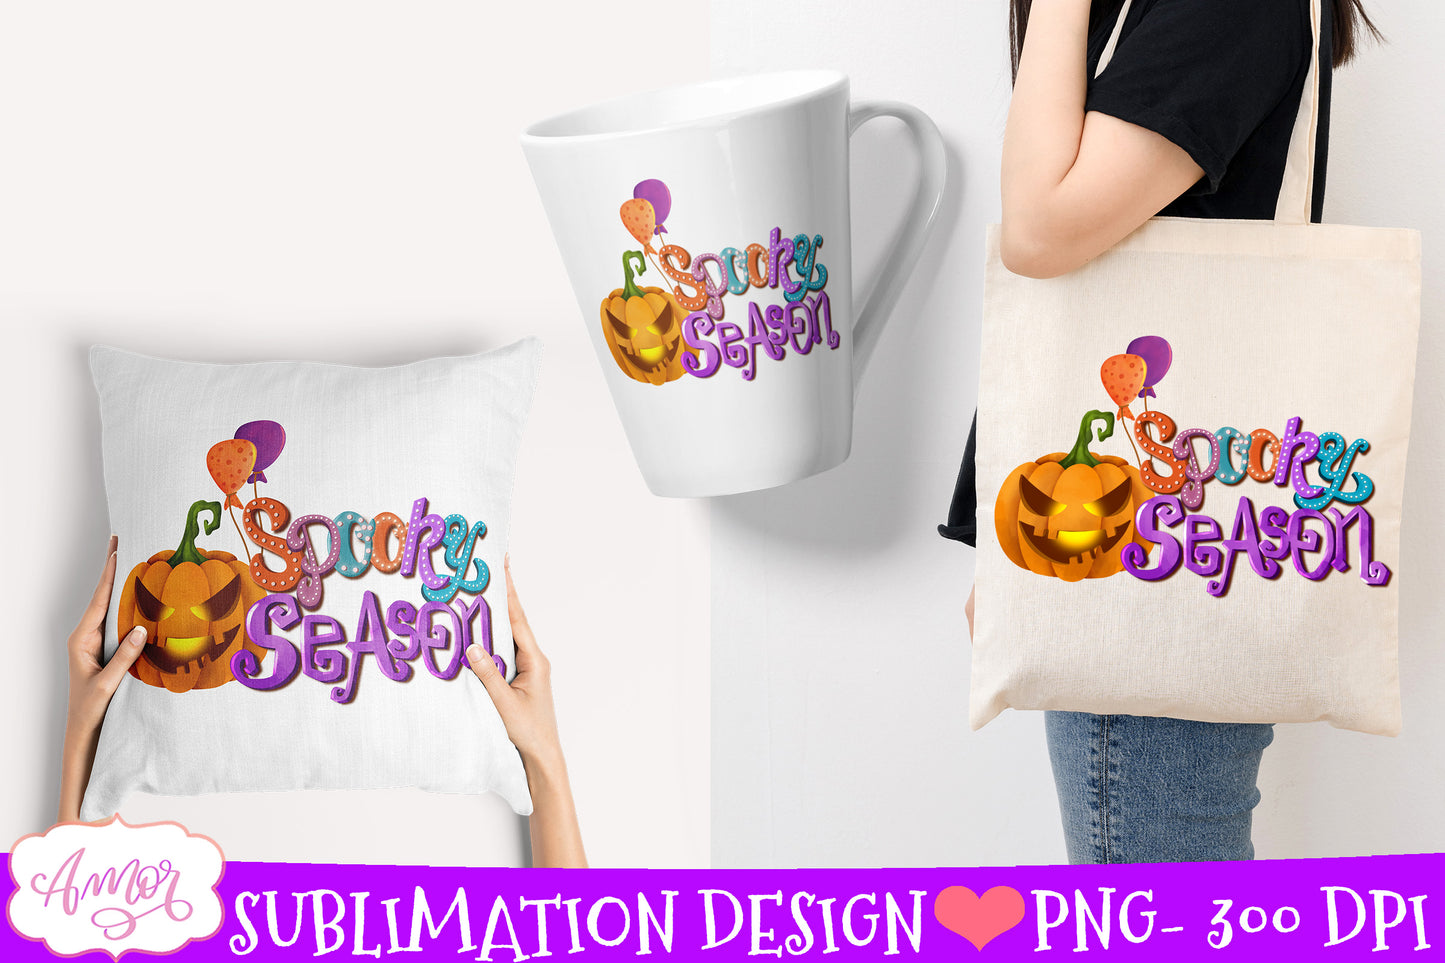 Spooky season Sublimation design | Cute Halloween design PNG